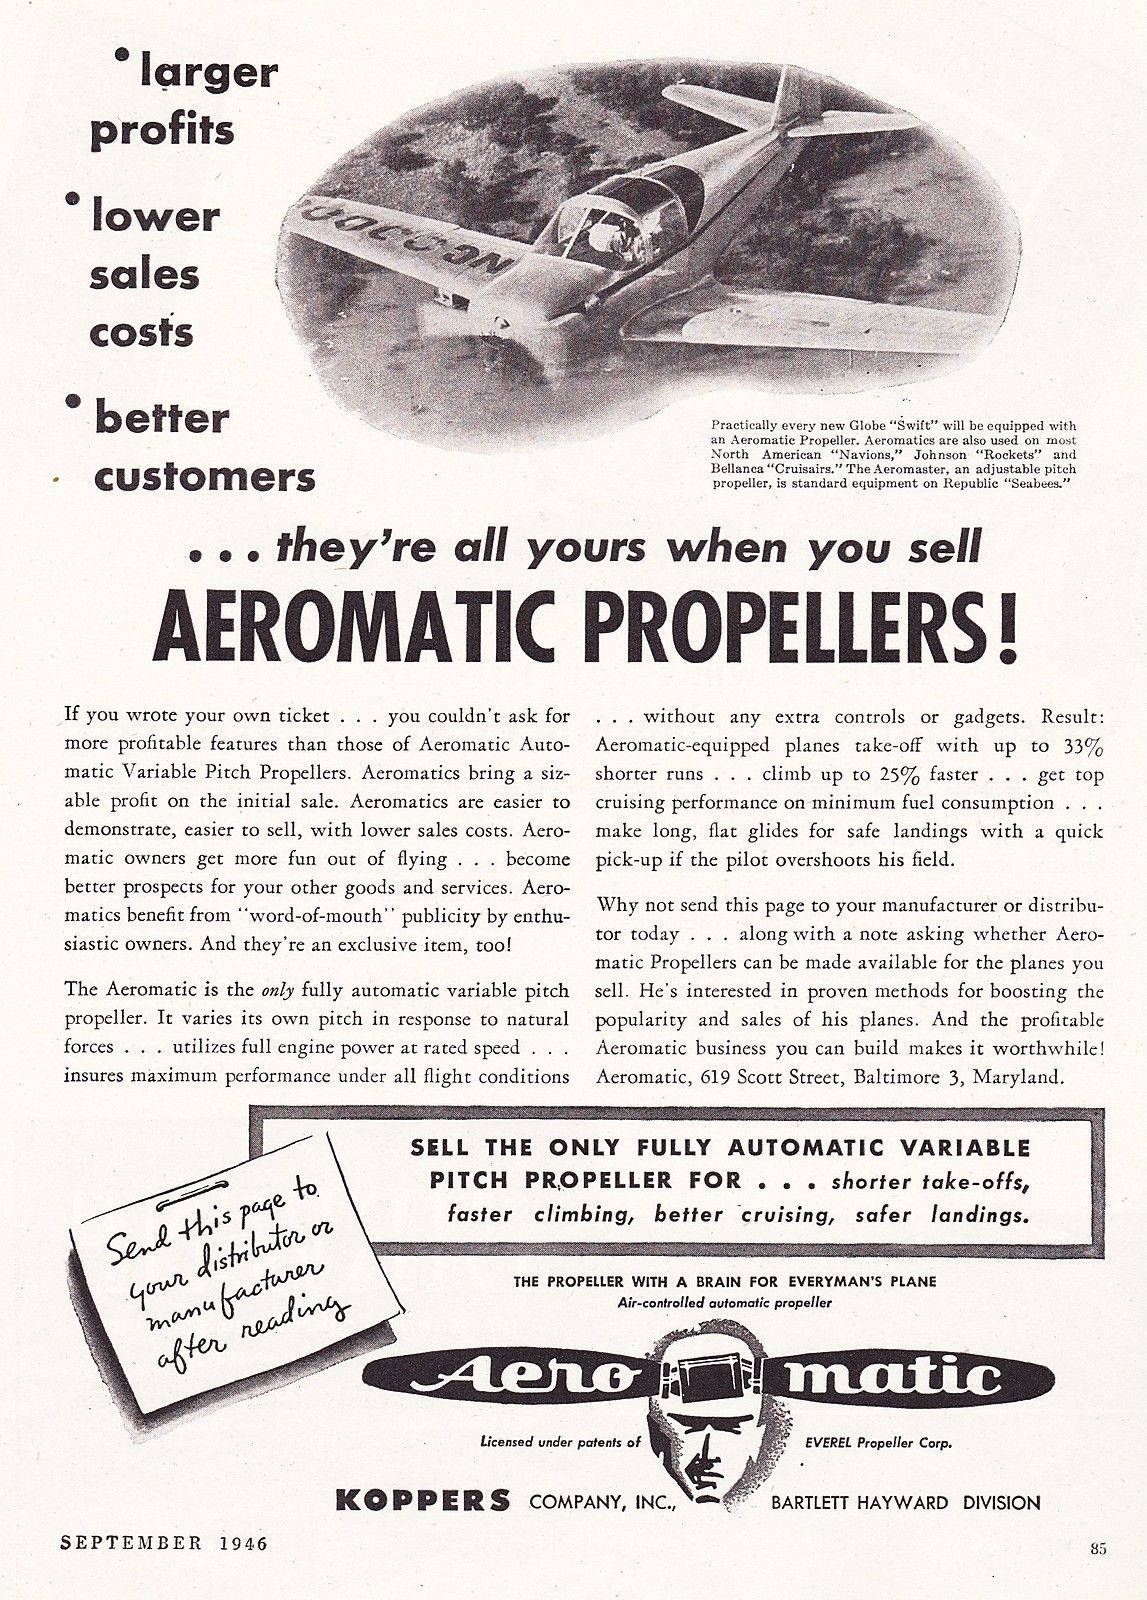 1946-Globe-Swift-Aeromatic-Propeller-Aircraft-ad.jpg